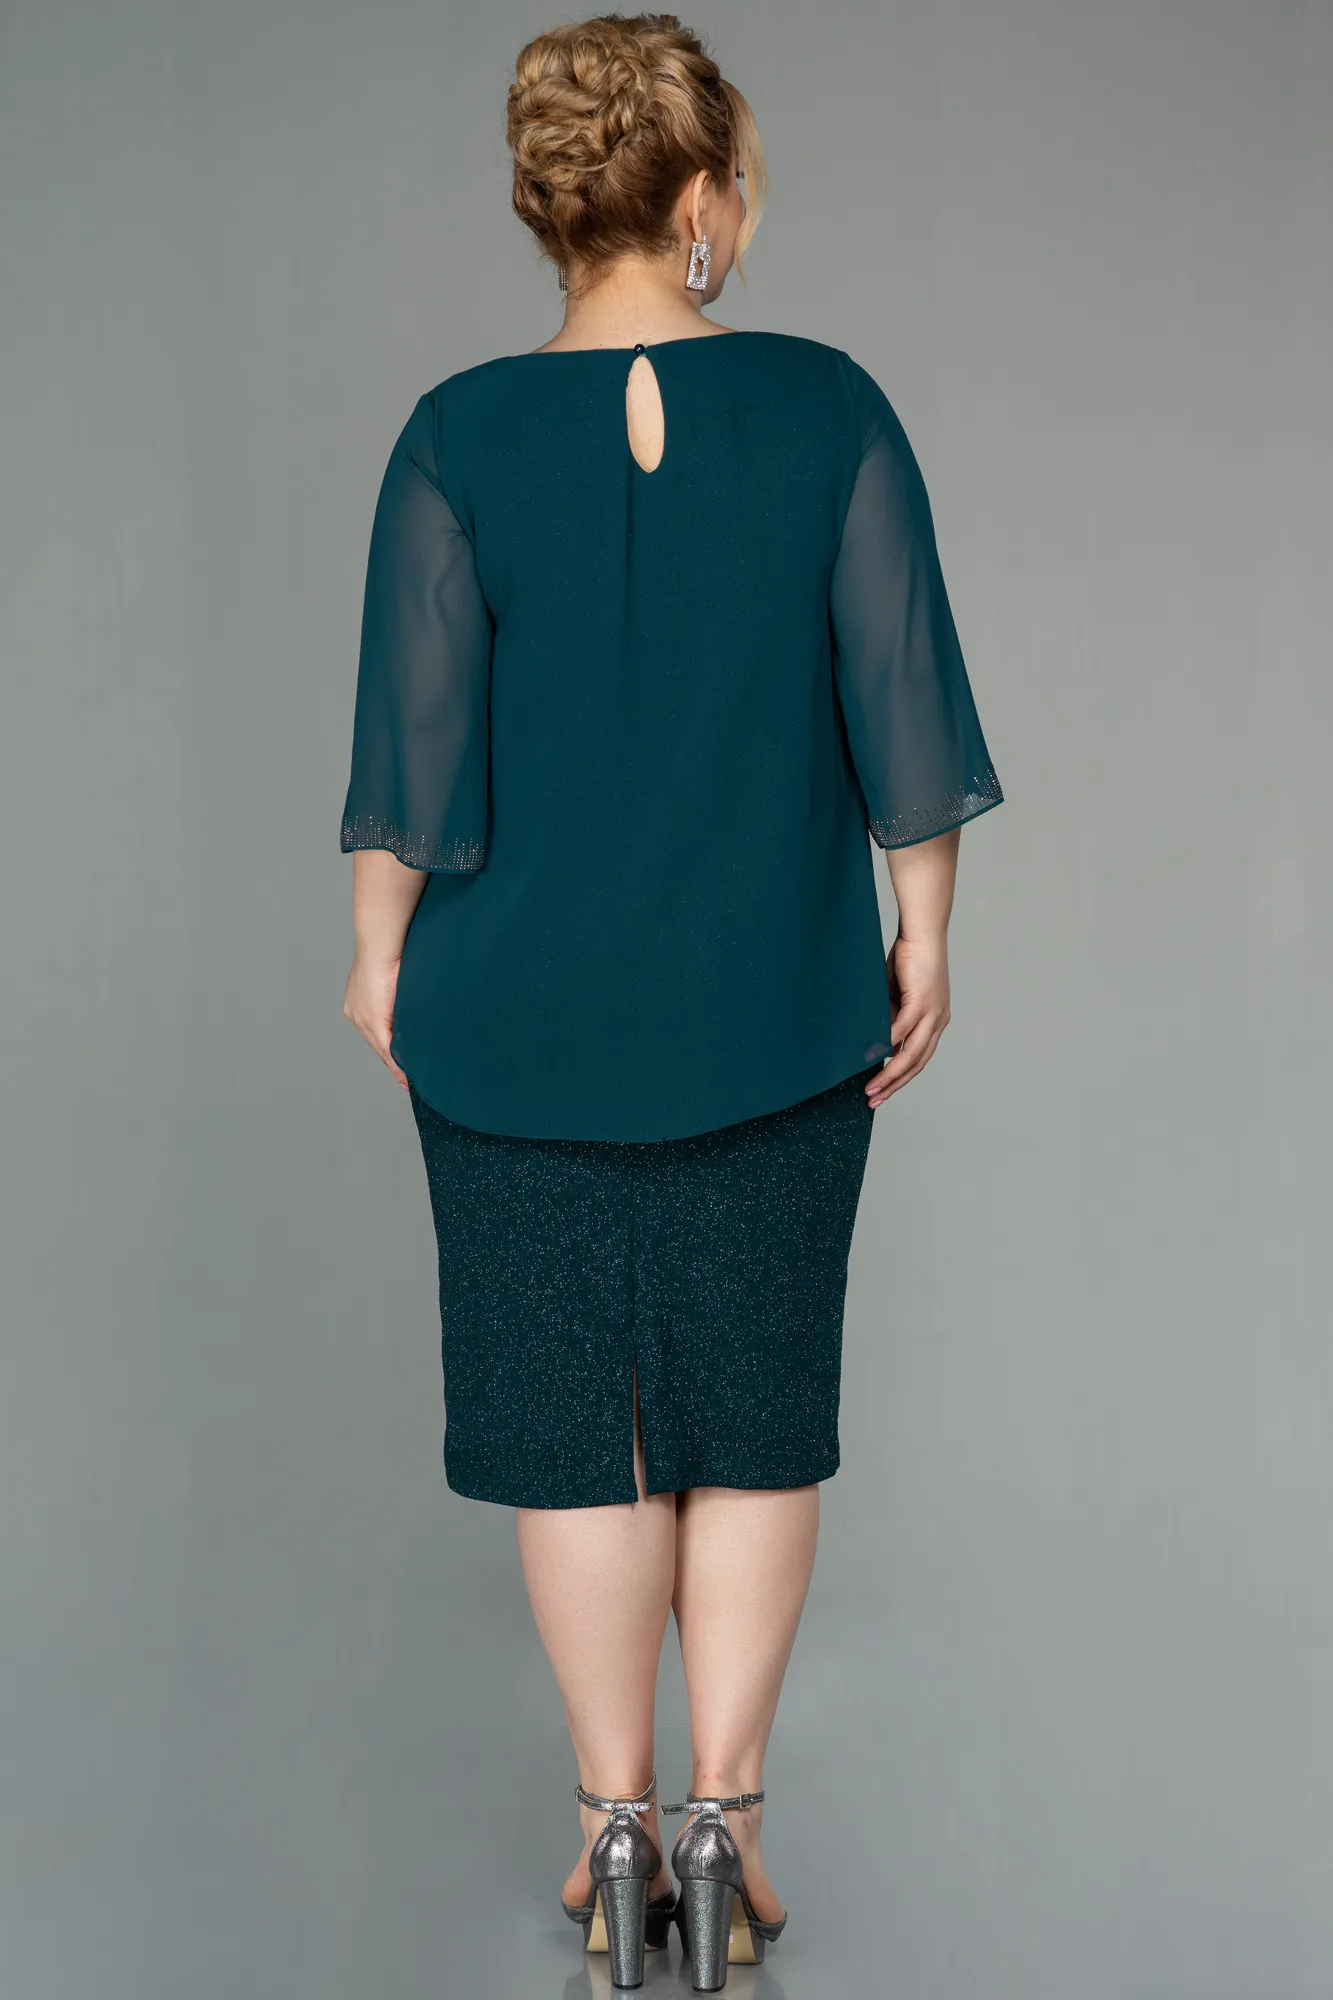 Emerald Green-Short Plus Size Evening Dress ABK1593